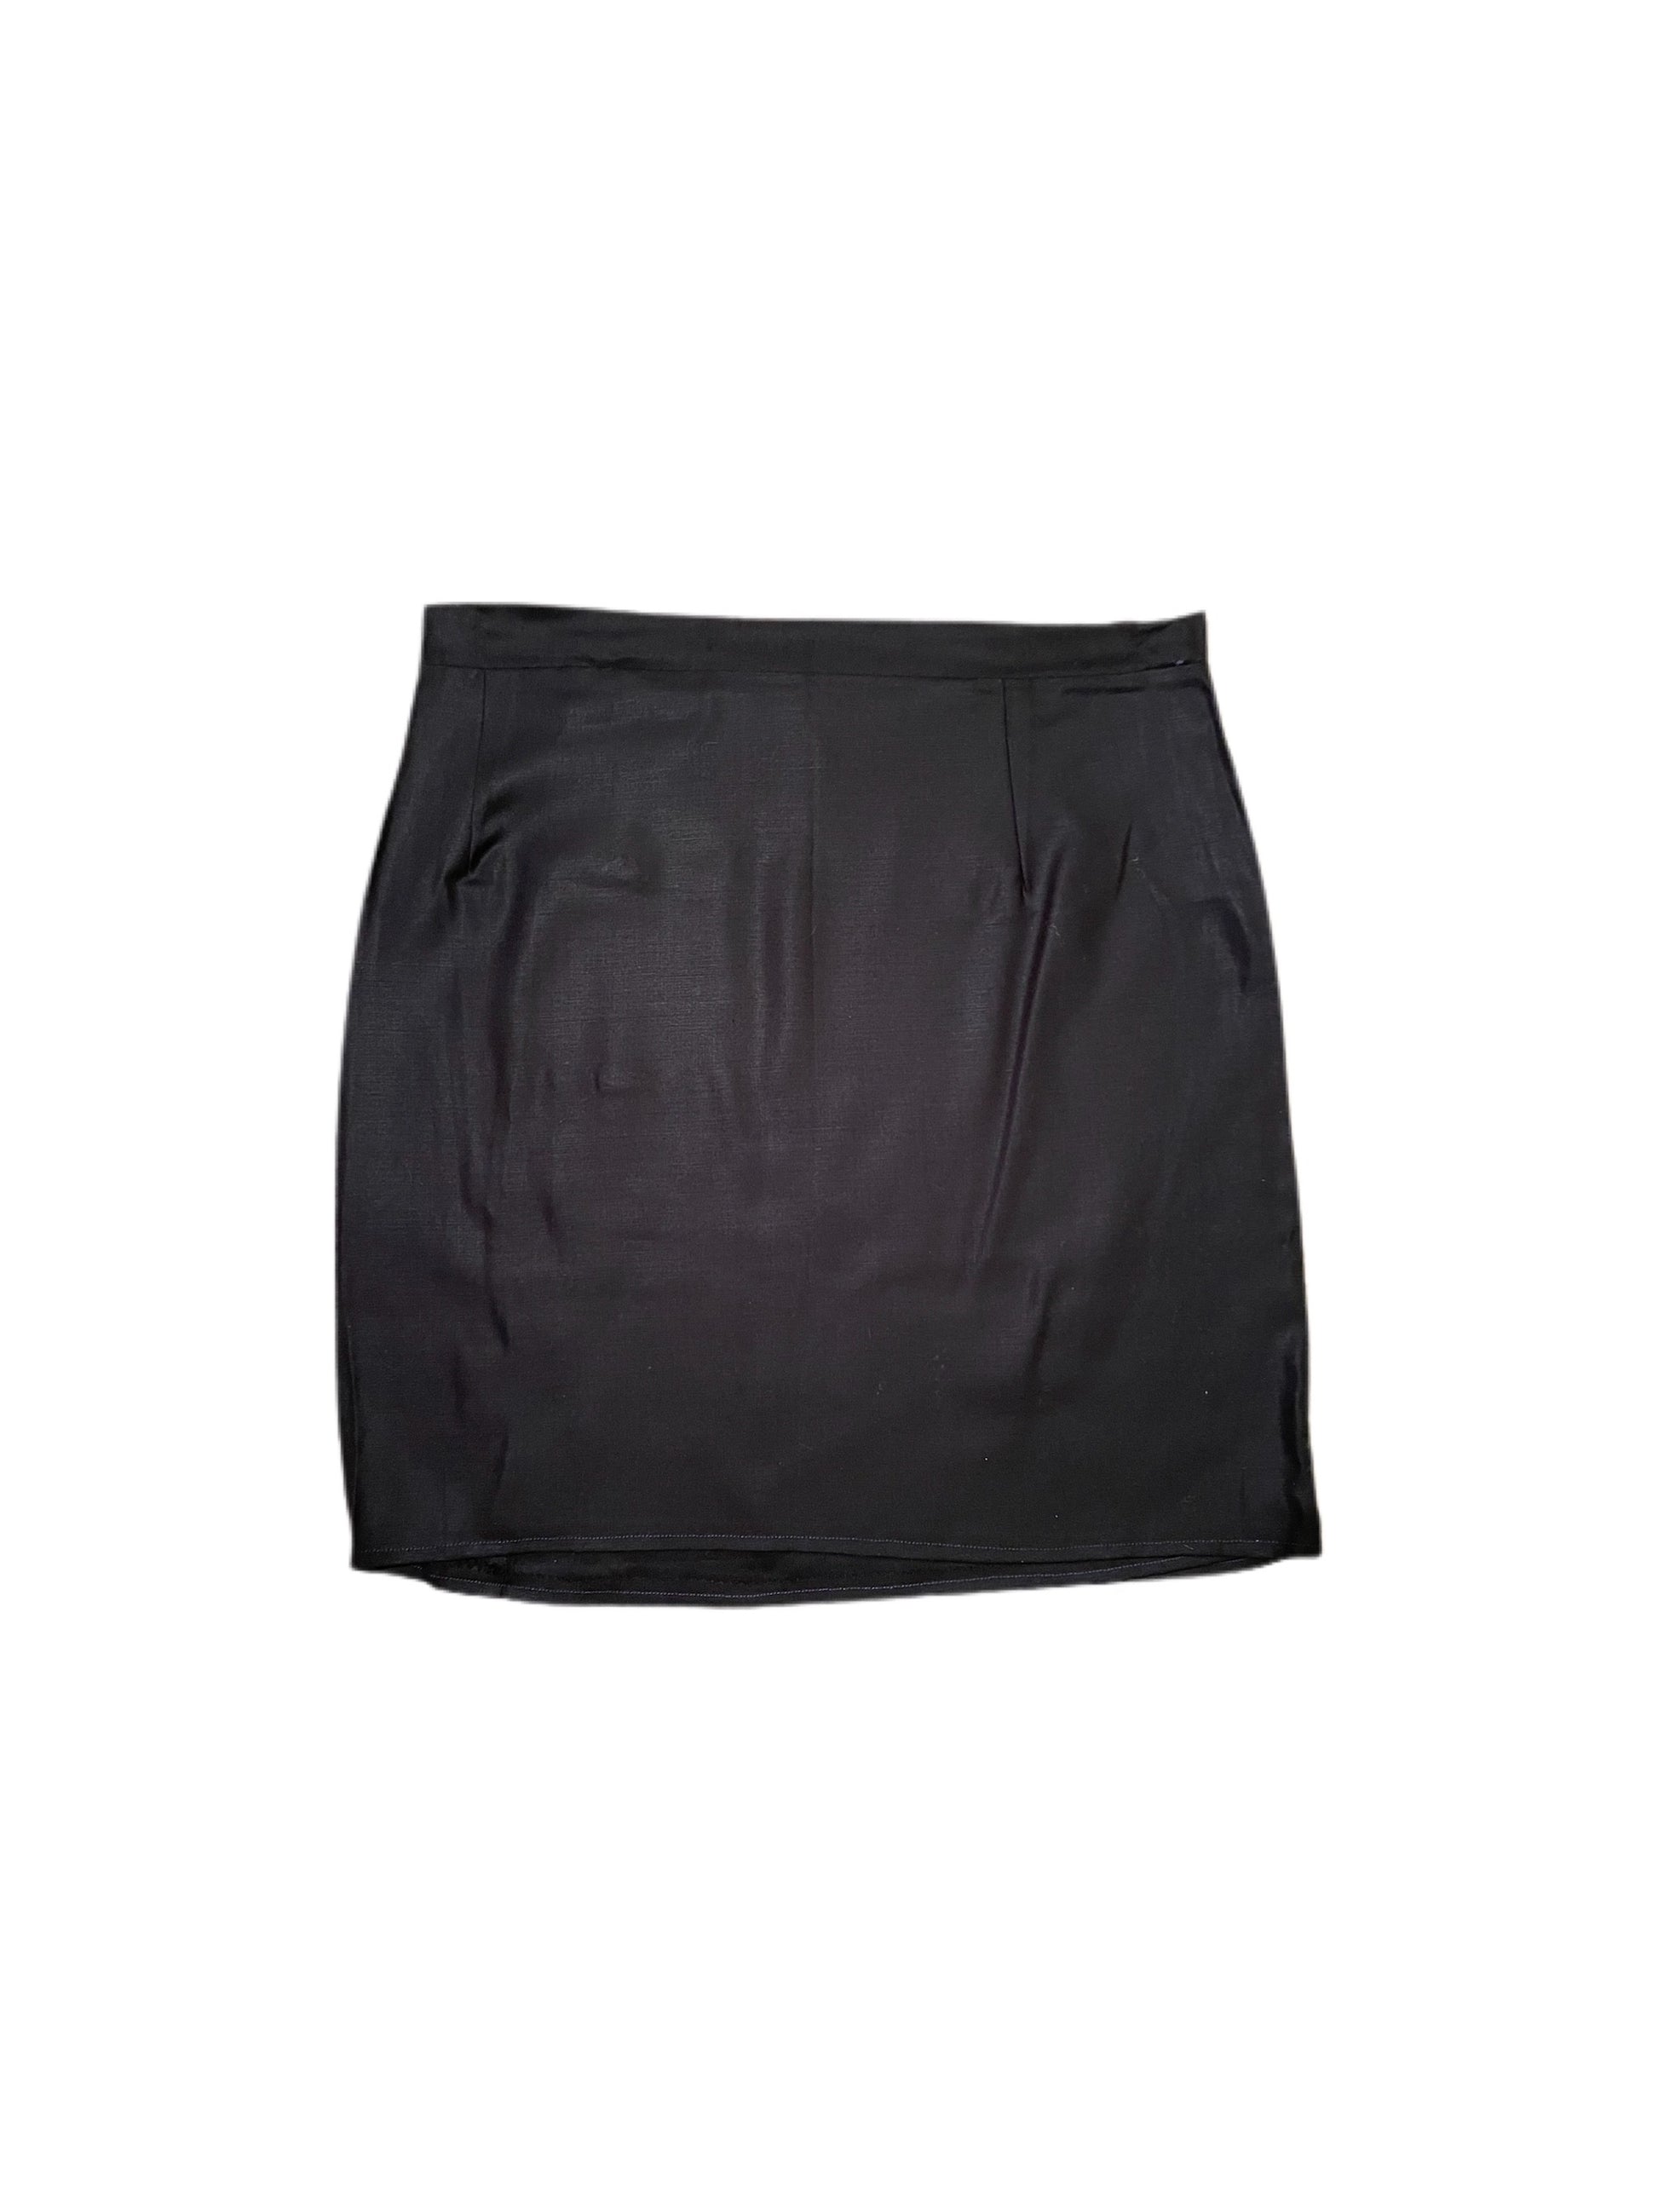 Wrap Skirt Product Back | Beatrice Bayliss